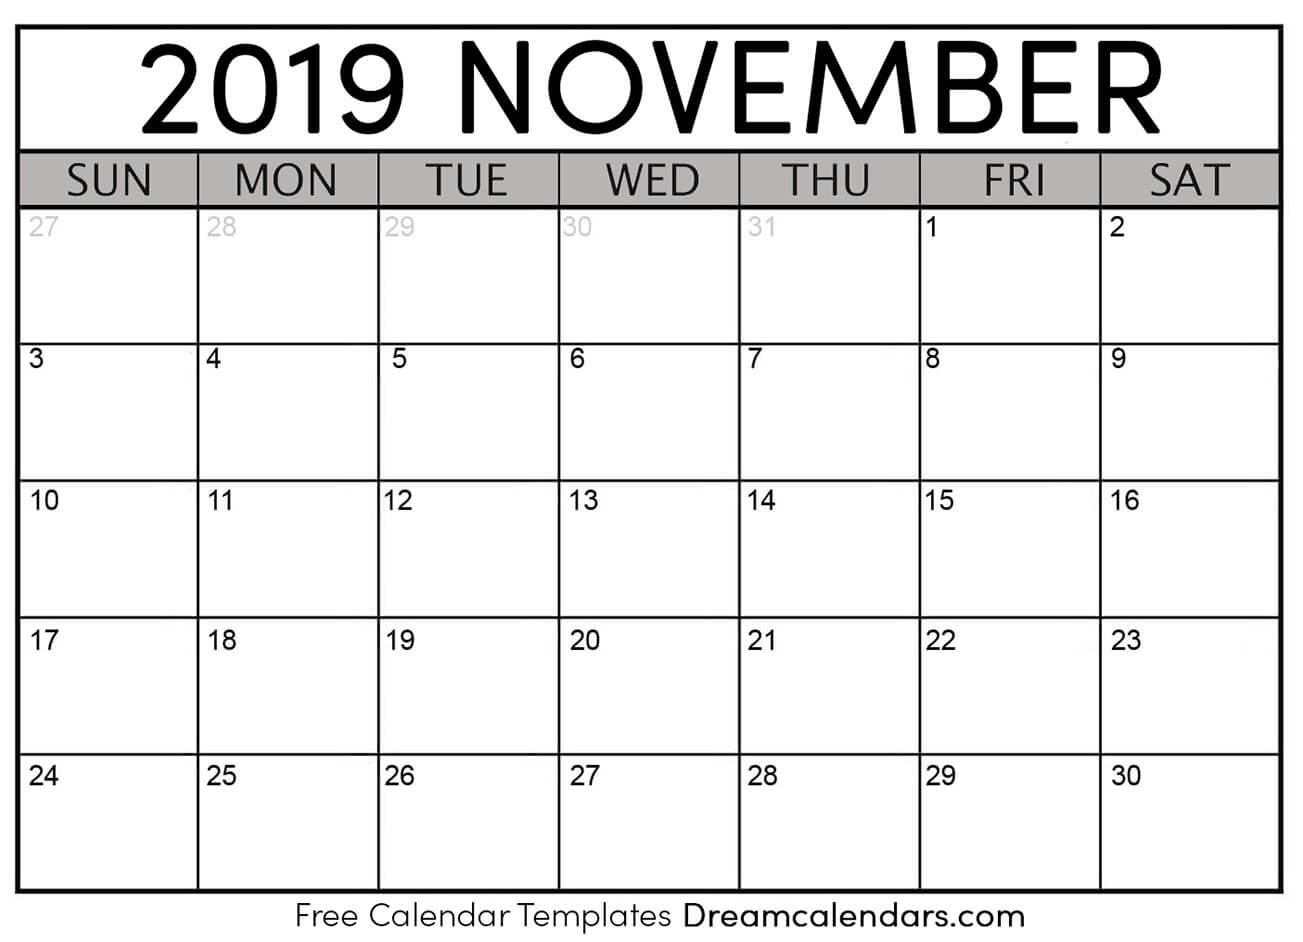 dream-calendars-make-your-calendar-template-blog-blank-printable